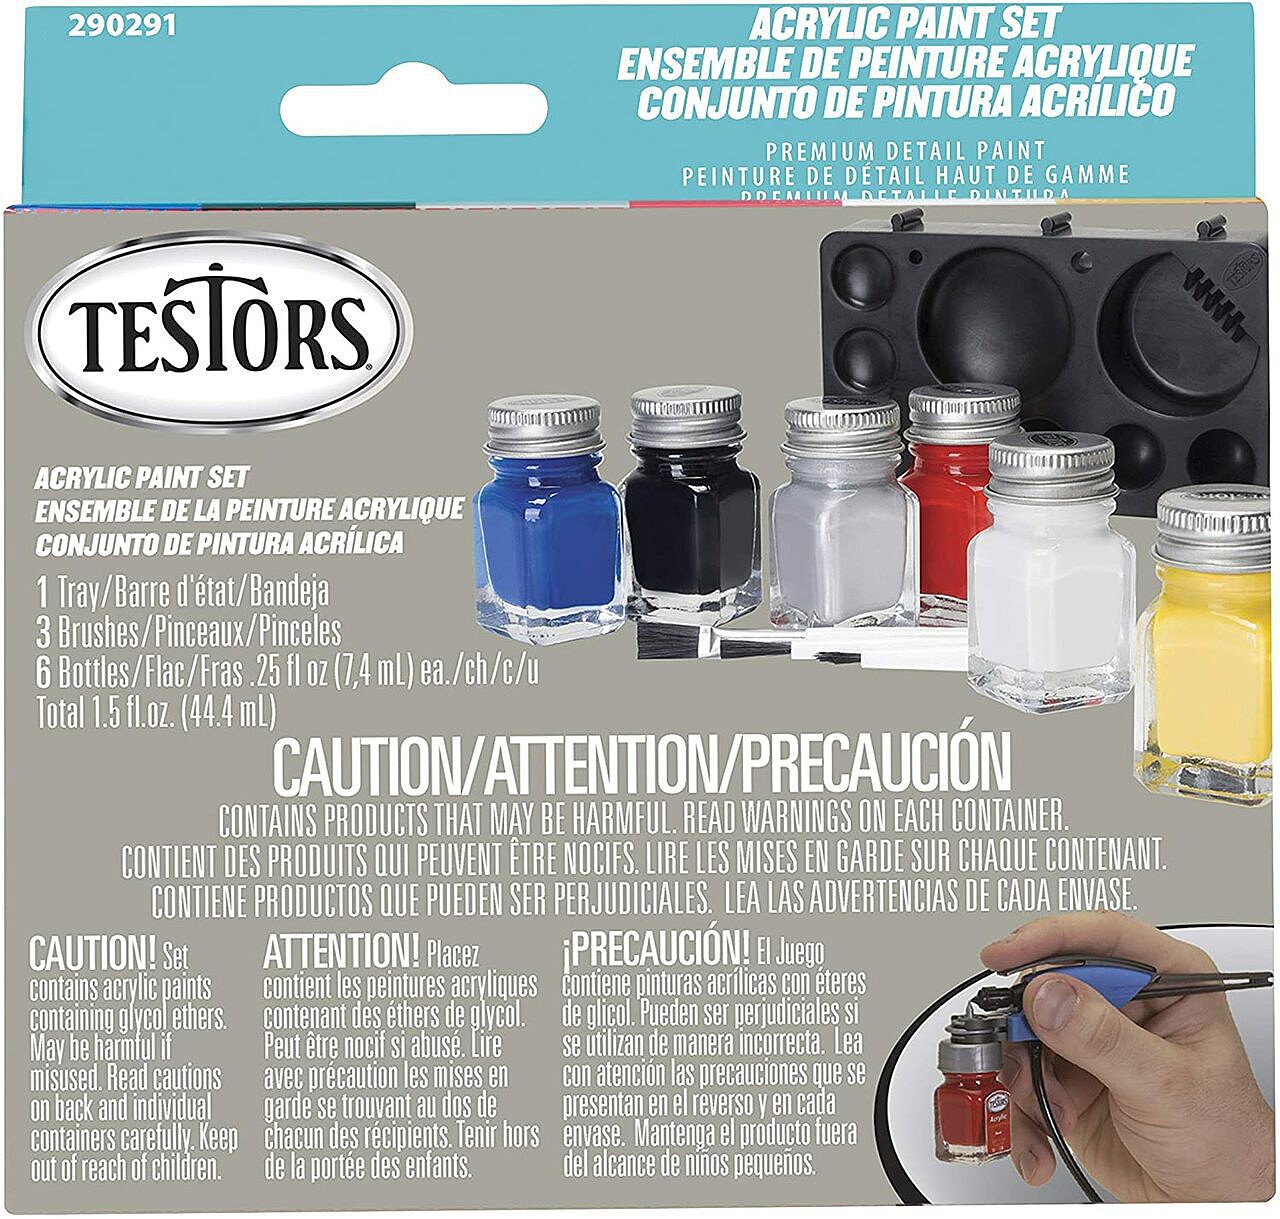 Testors 9119 Model Car Paint Kit (6 Colors)